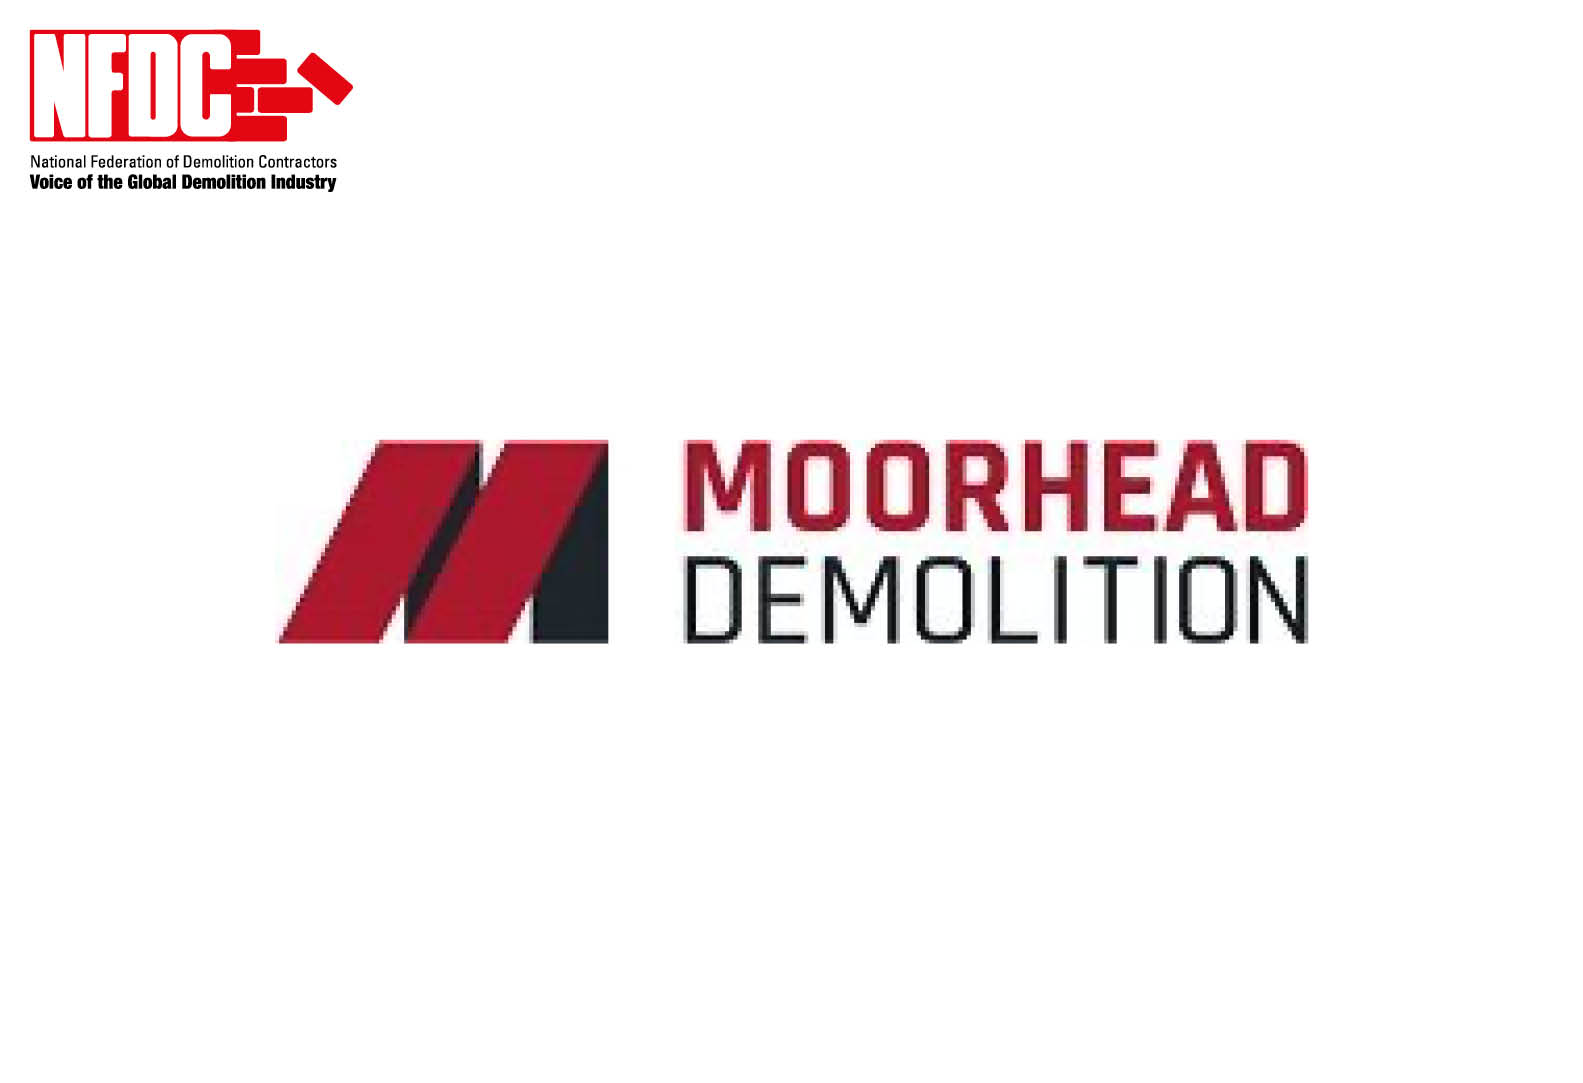 Moorhead Demolition Ltd